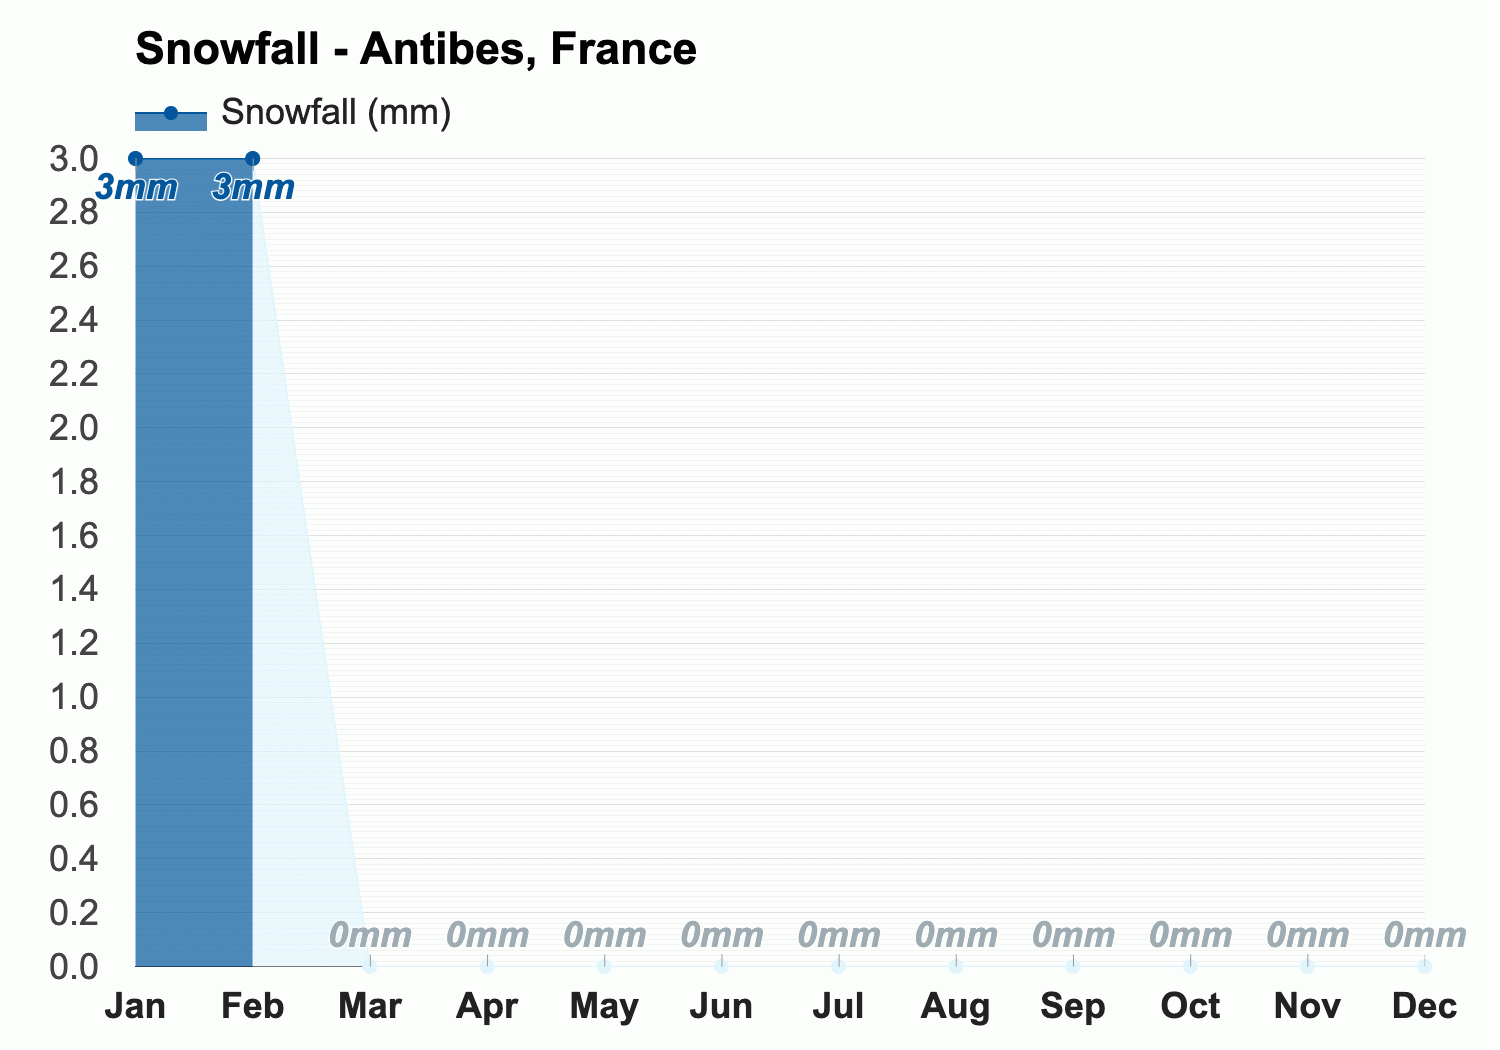 April Weather forecast - Spring forecast - Antibes, France